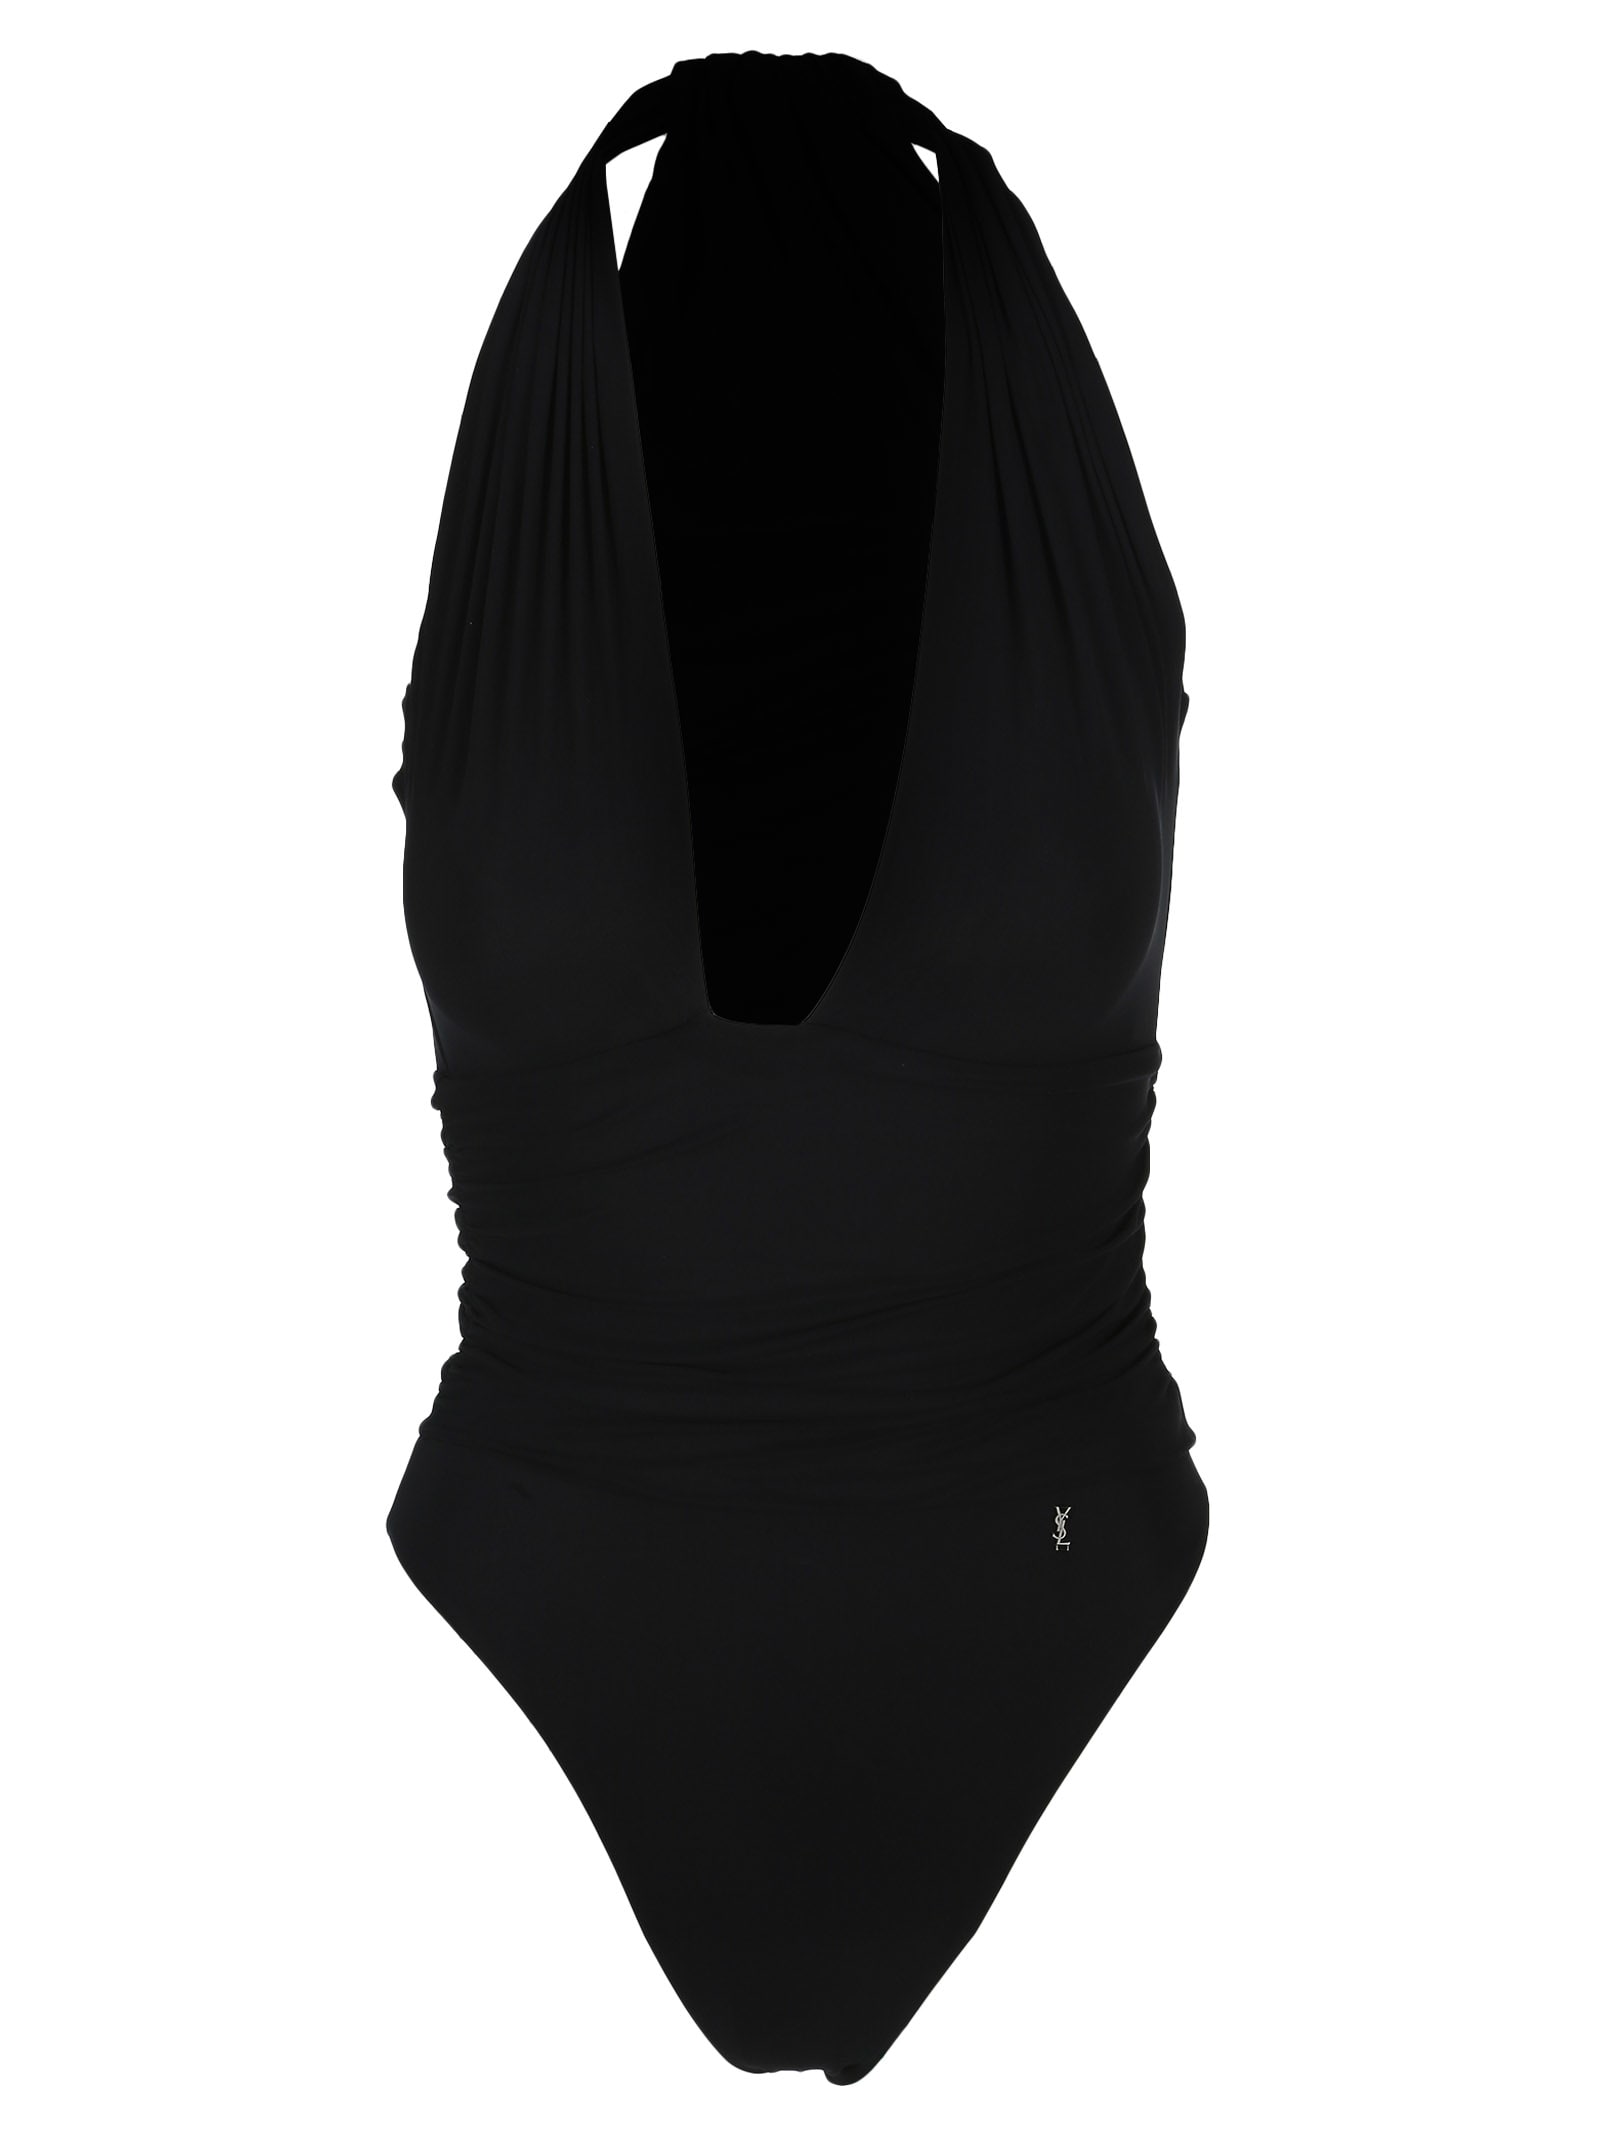 Saint Laurent Swimsuit Draped On Shoulder In Black